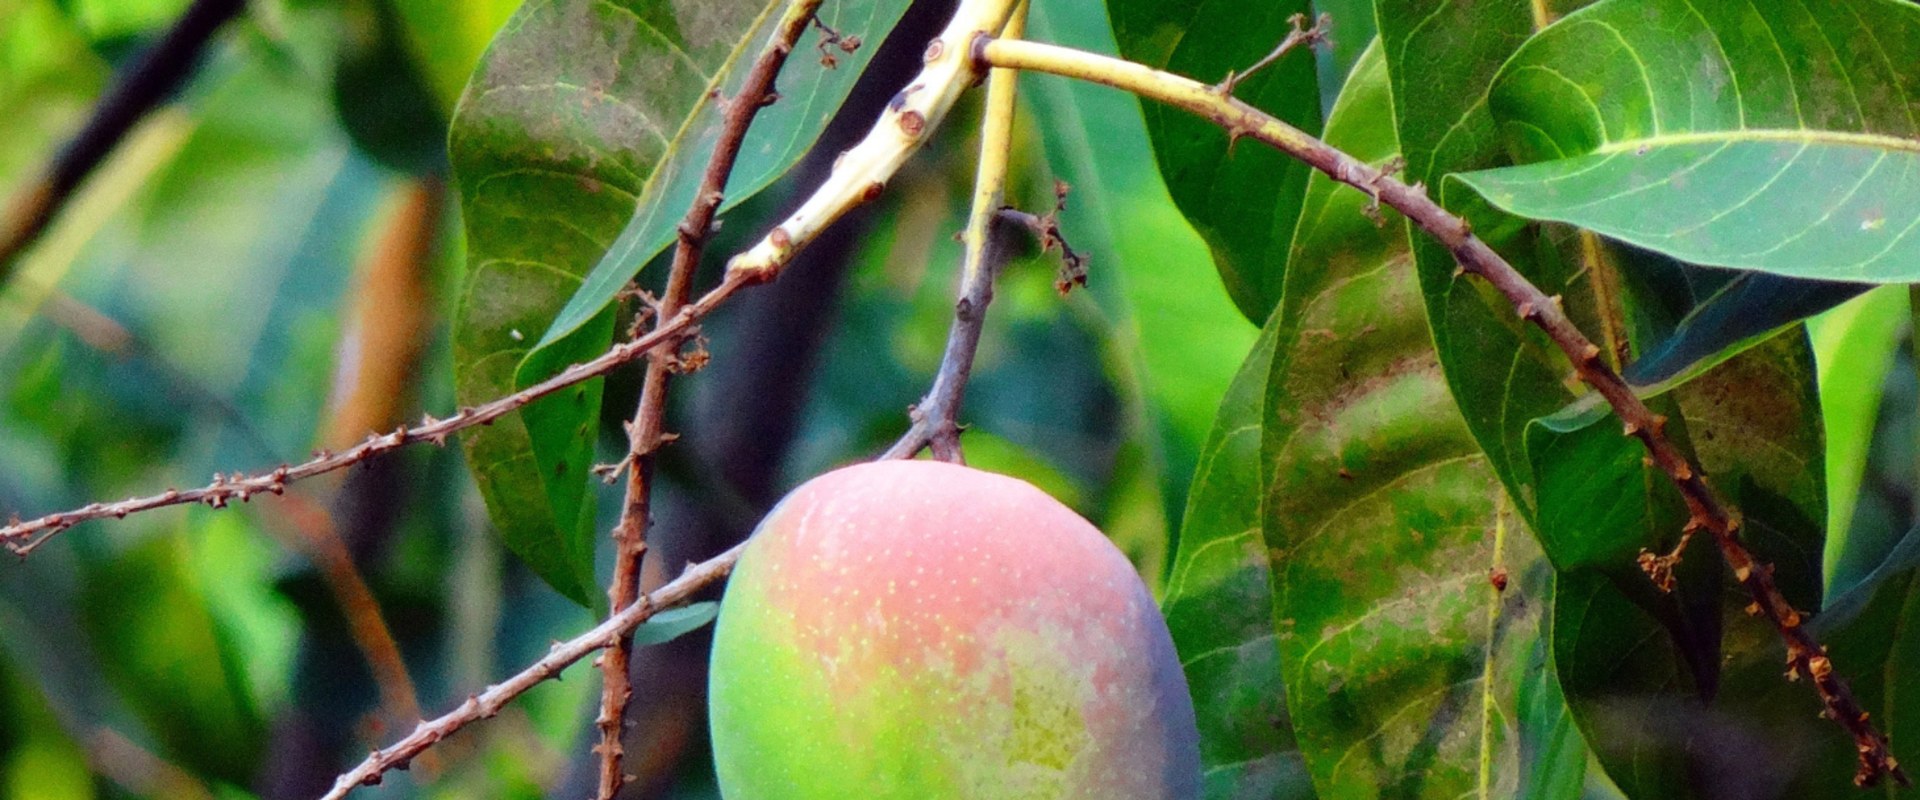 How Long Do Wholesale Raw Mangoes Last?